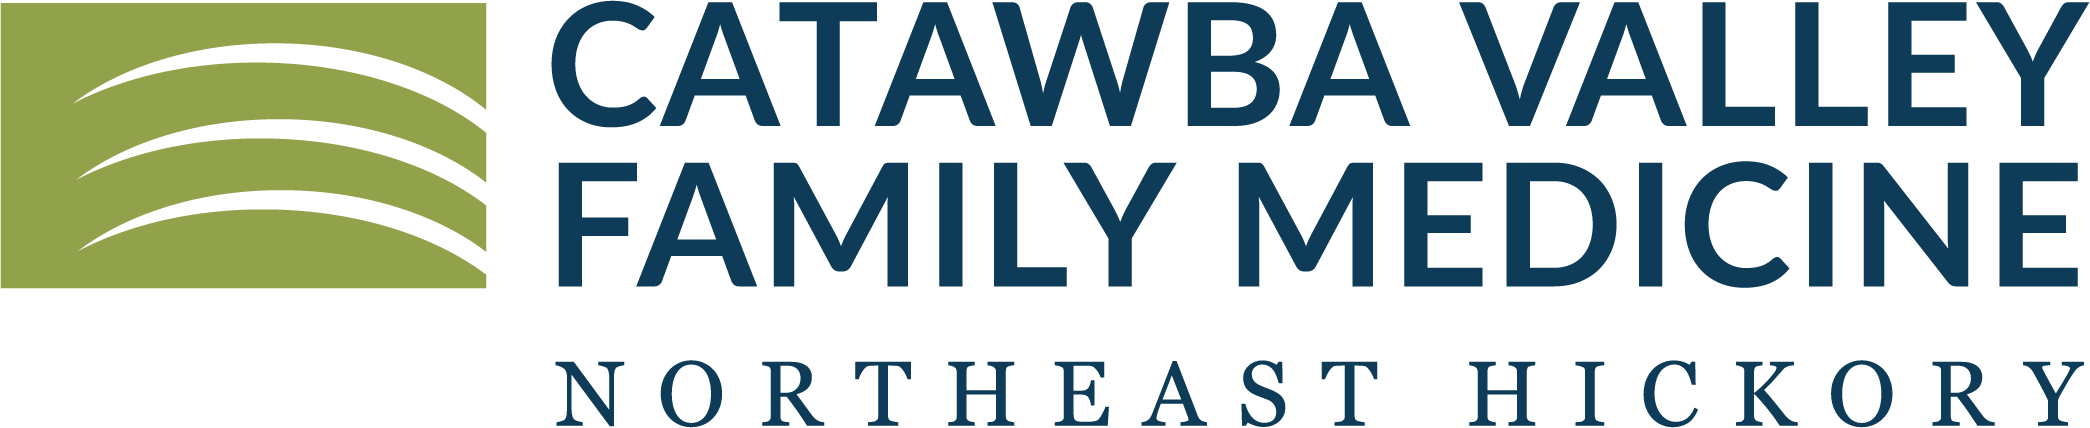 Catawba Valley Family Medicine - Northeast Hickory